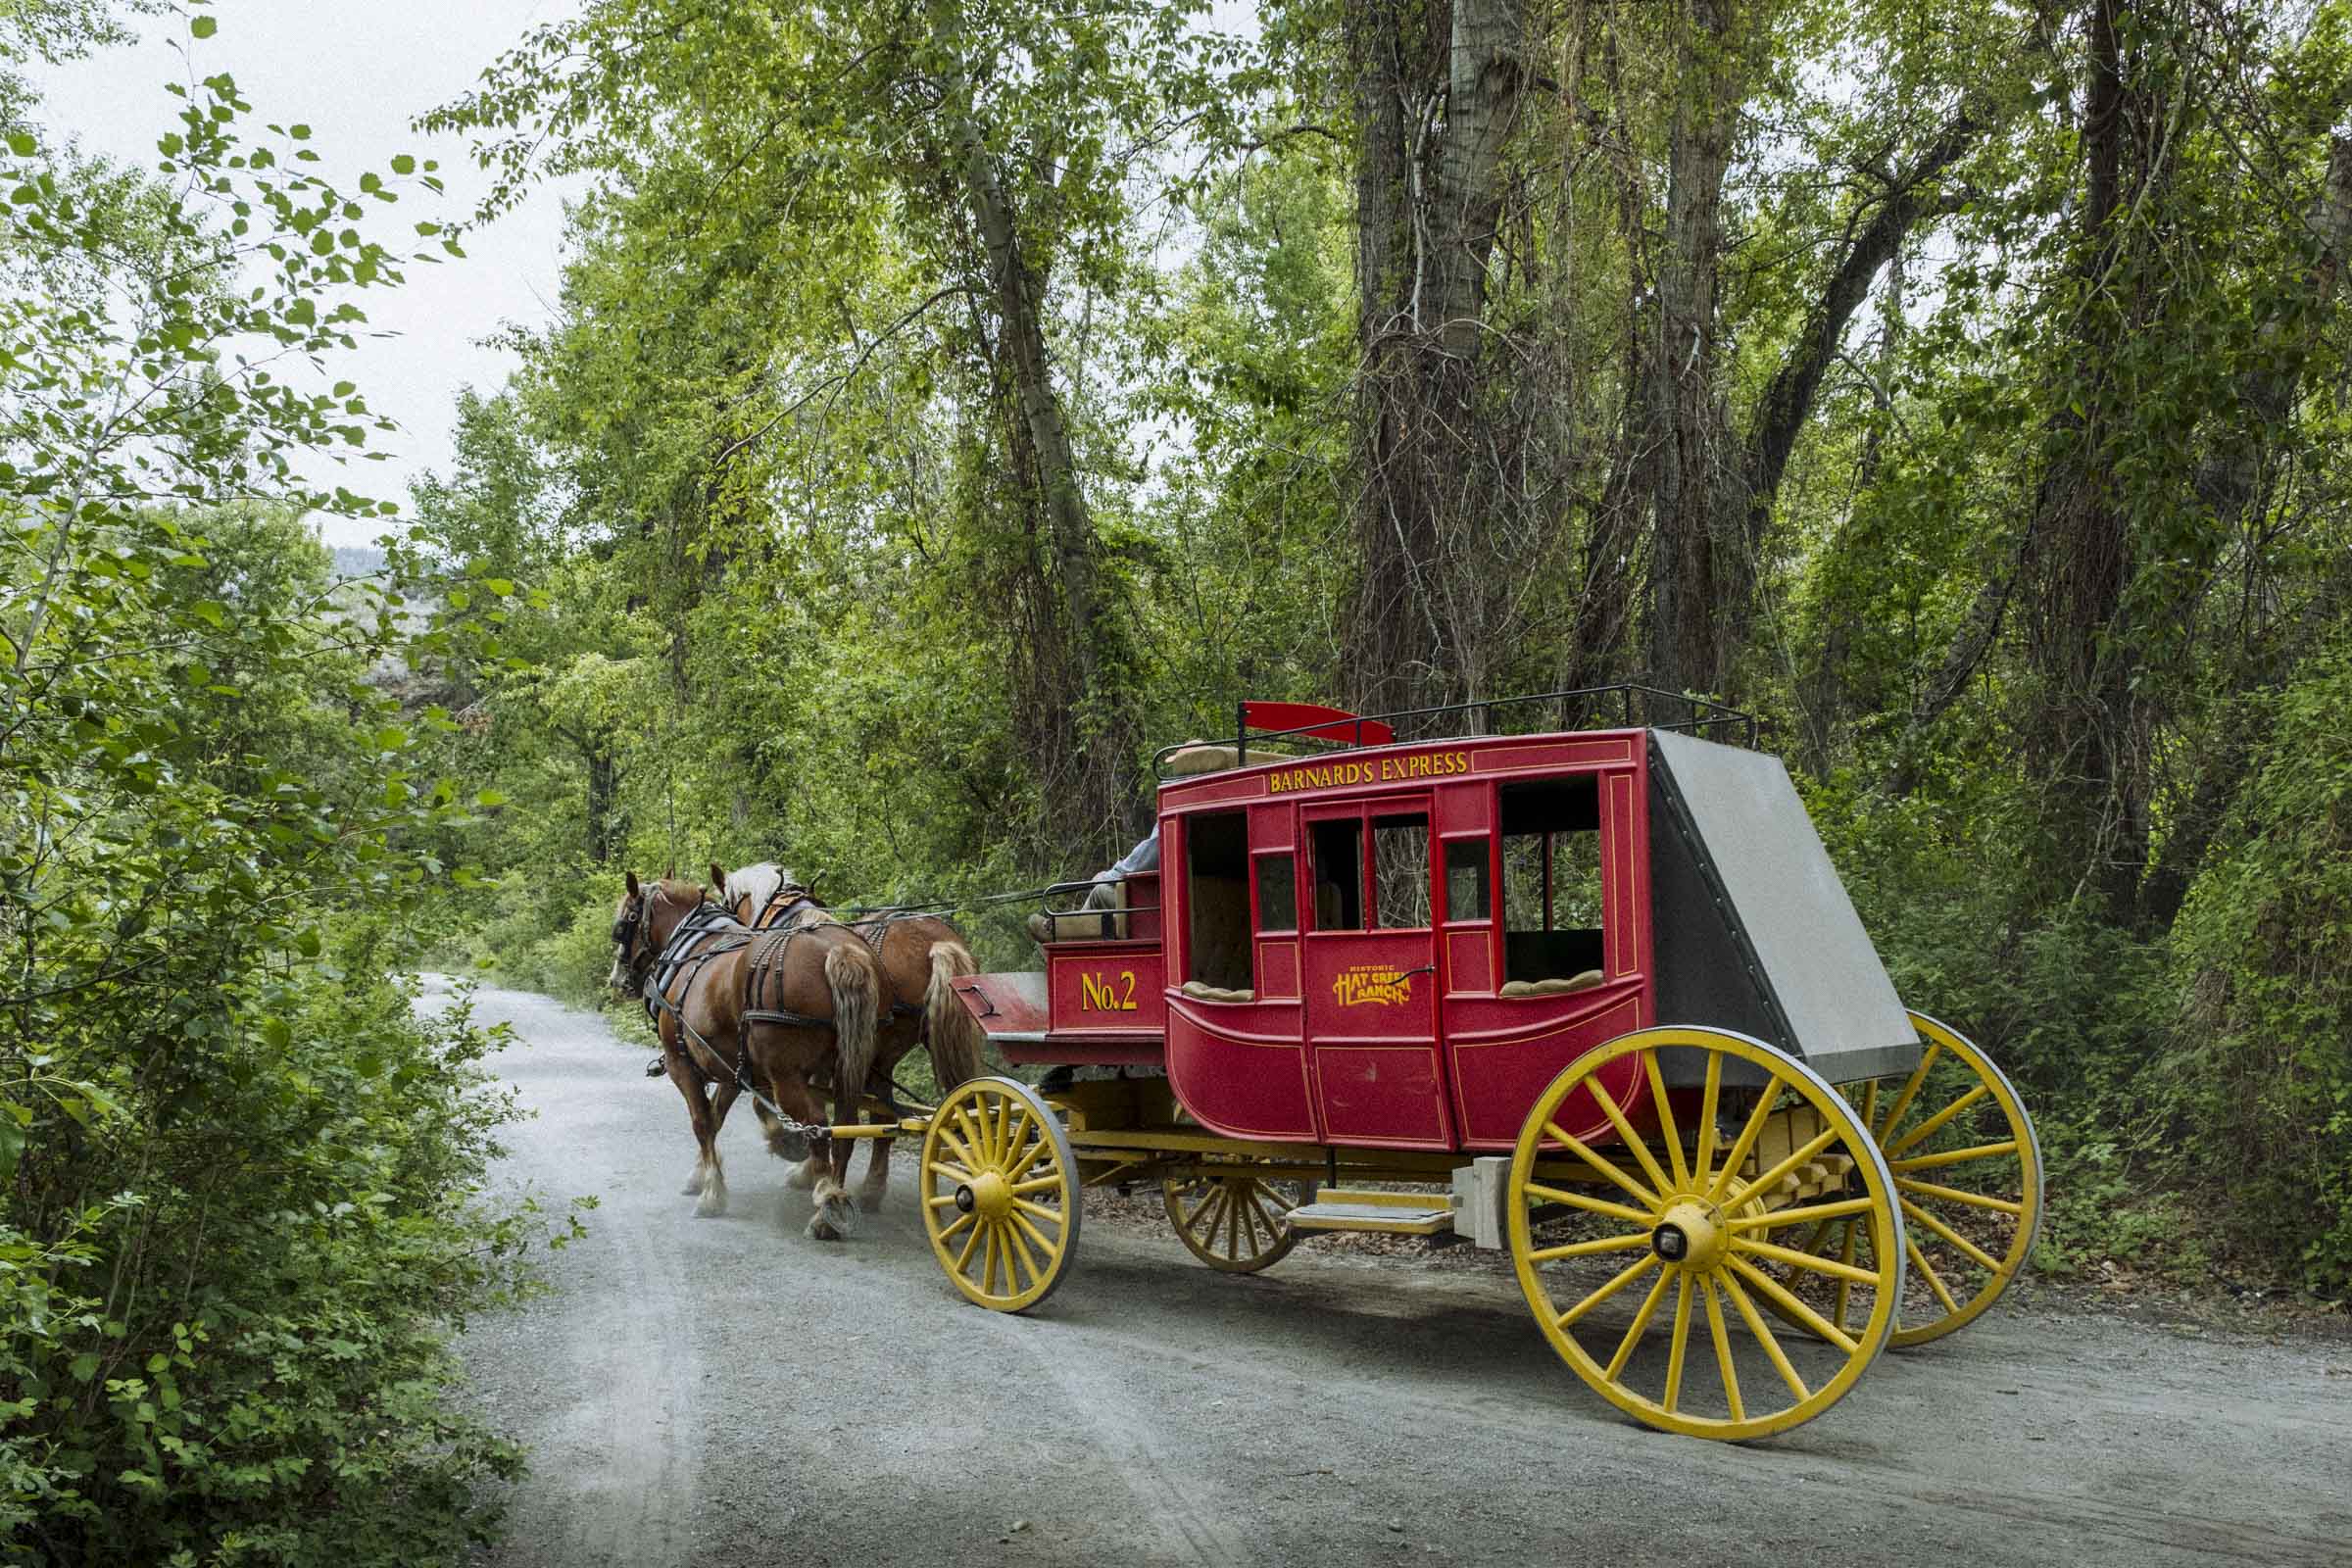 The Barnard's Express wagon coach